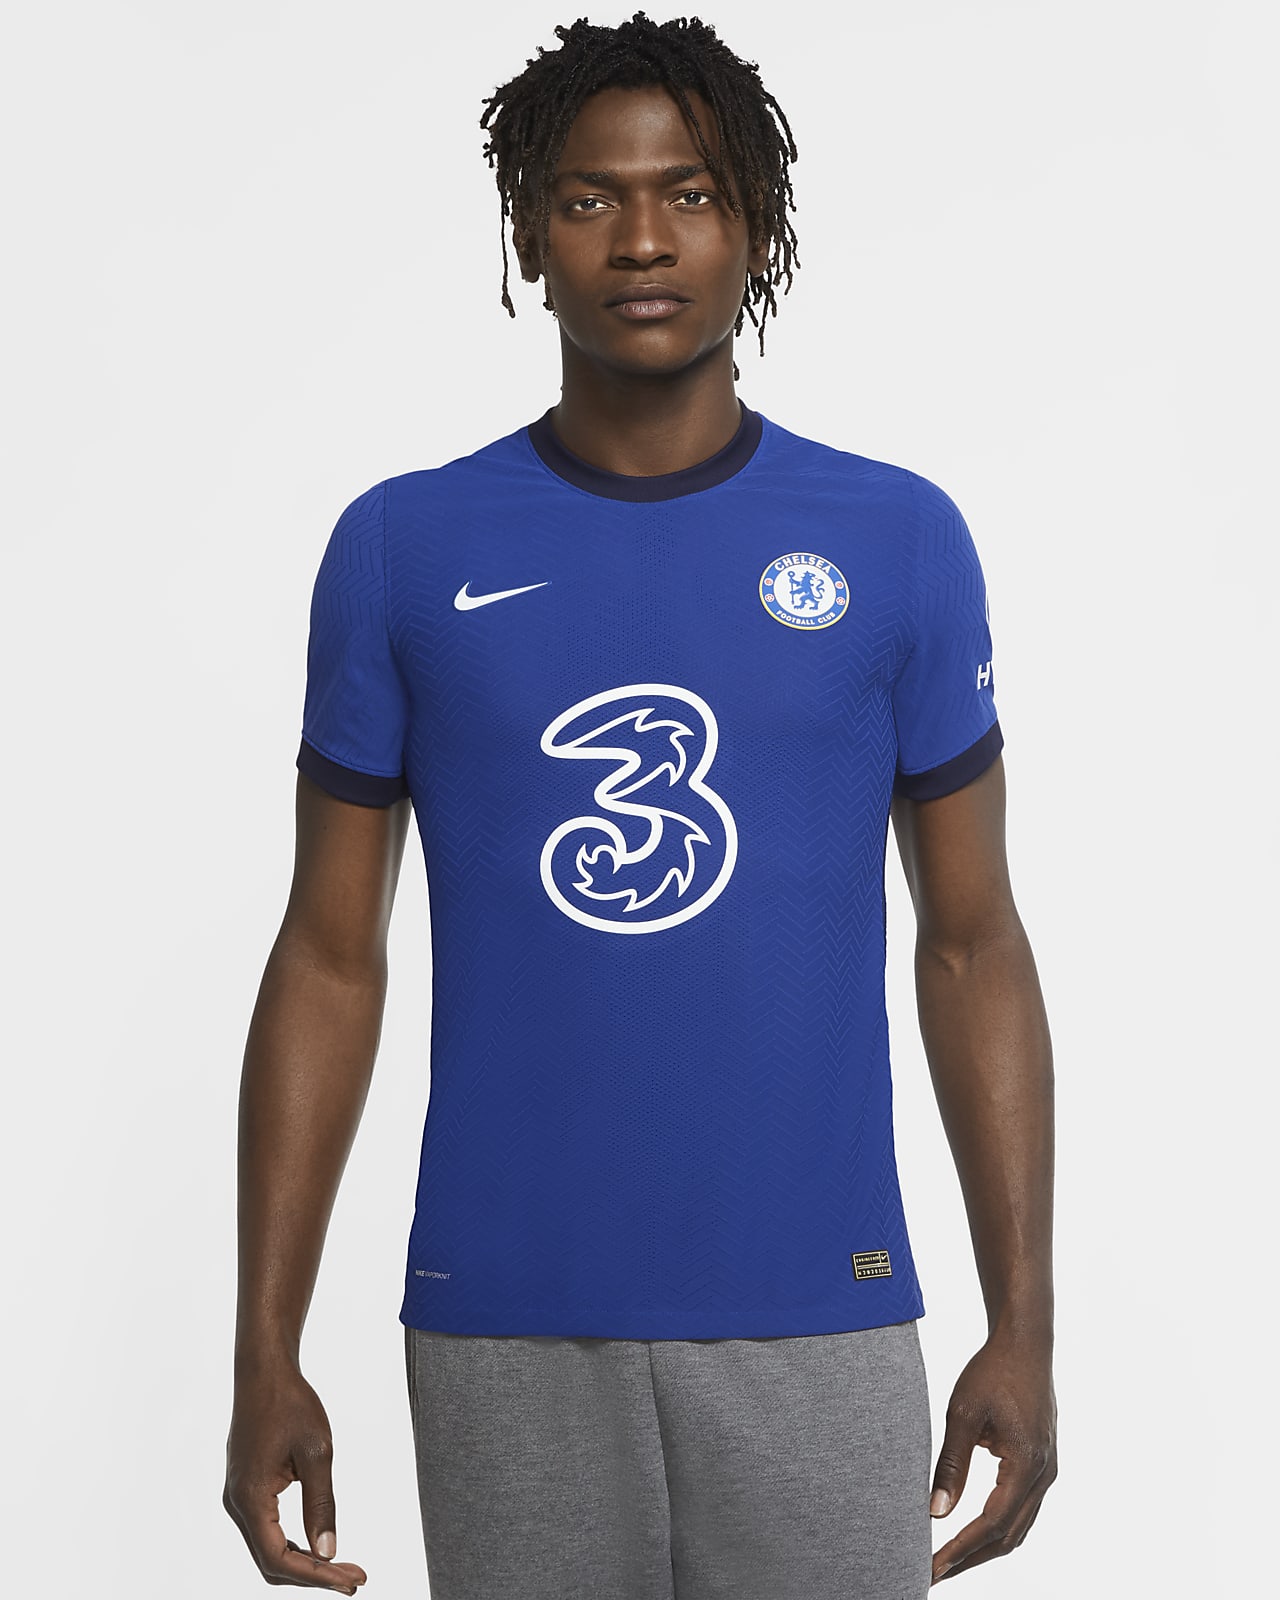 Camiseta de fútbol de local para hombre Vapor Match del Chelsea FC 2020/21.  Nike.com